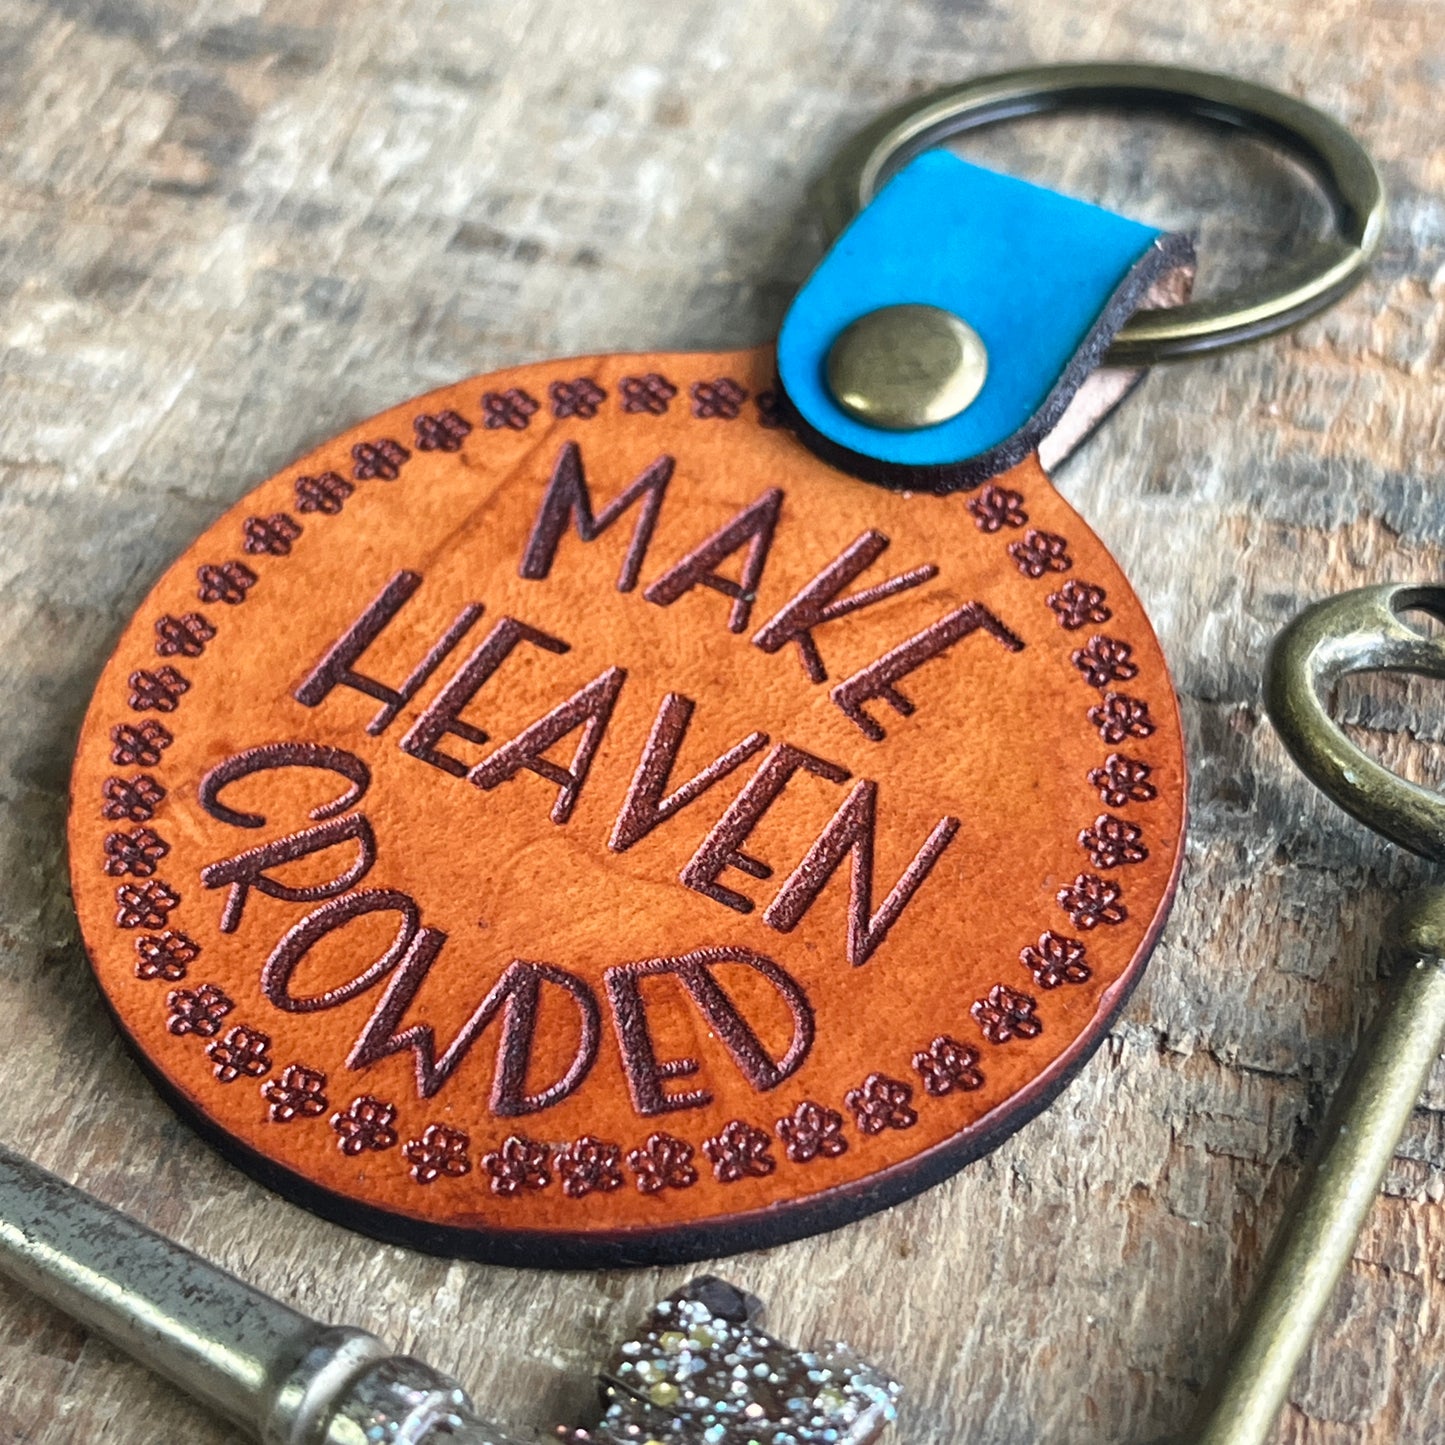 Christian Keychains Handmade, Make Heaven Crowded, Upscale Faith Based Gifts